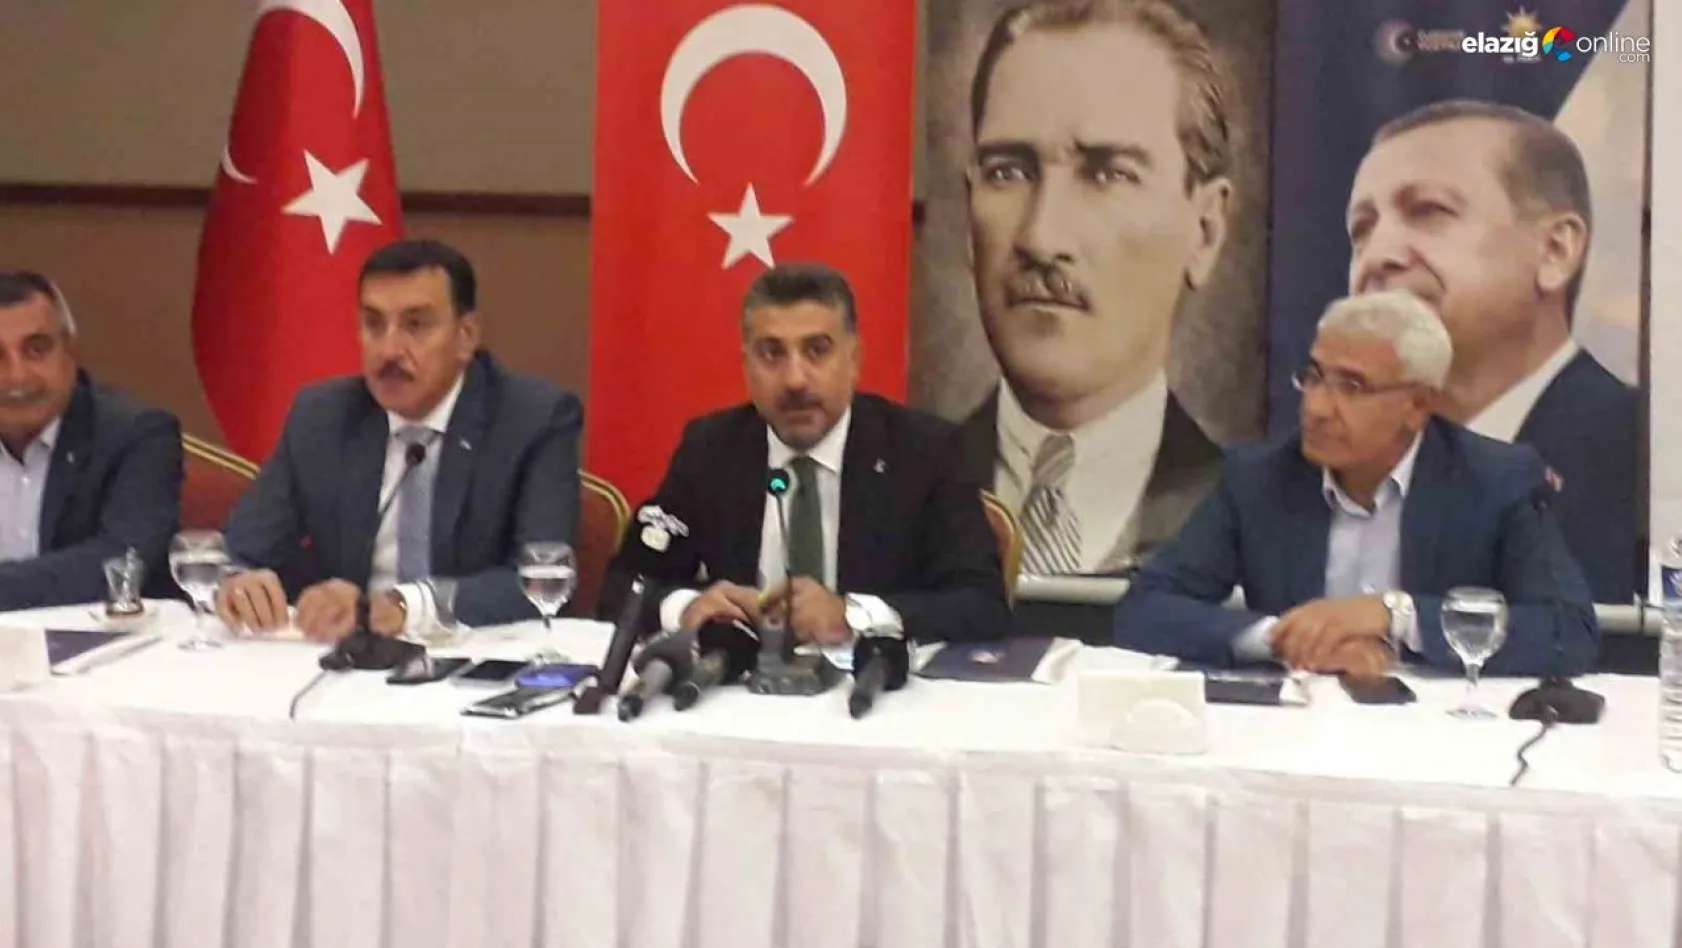 AK Parti Malatya İl Yönetimi açıklandı